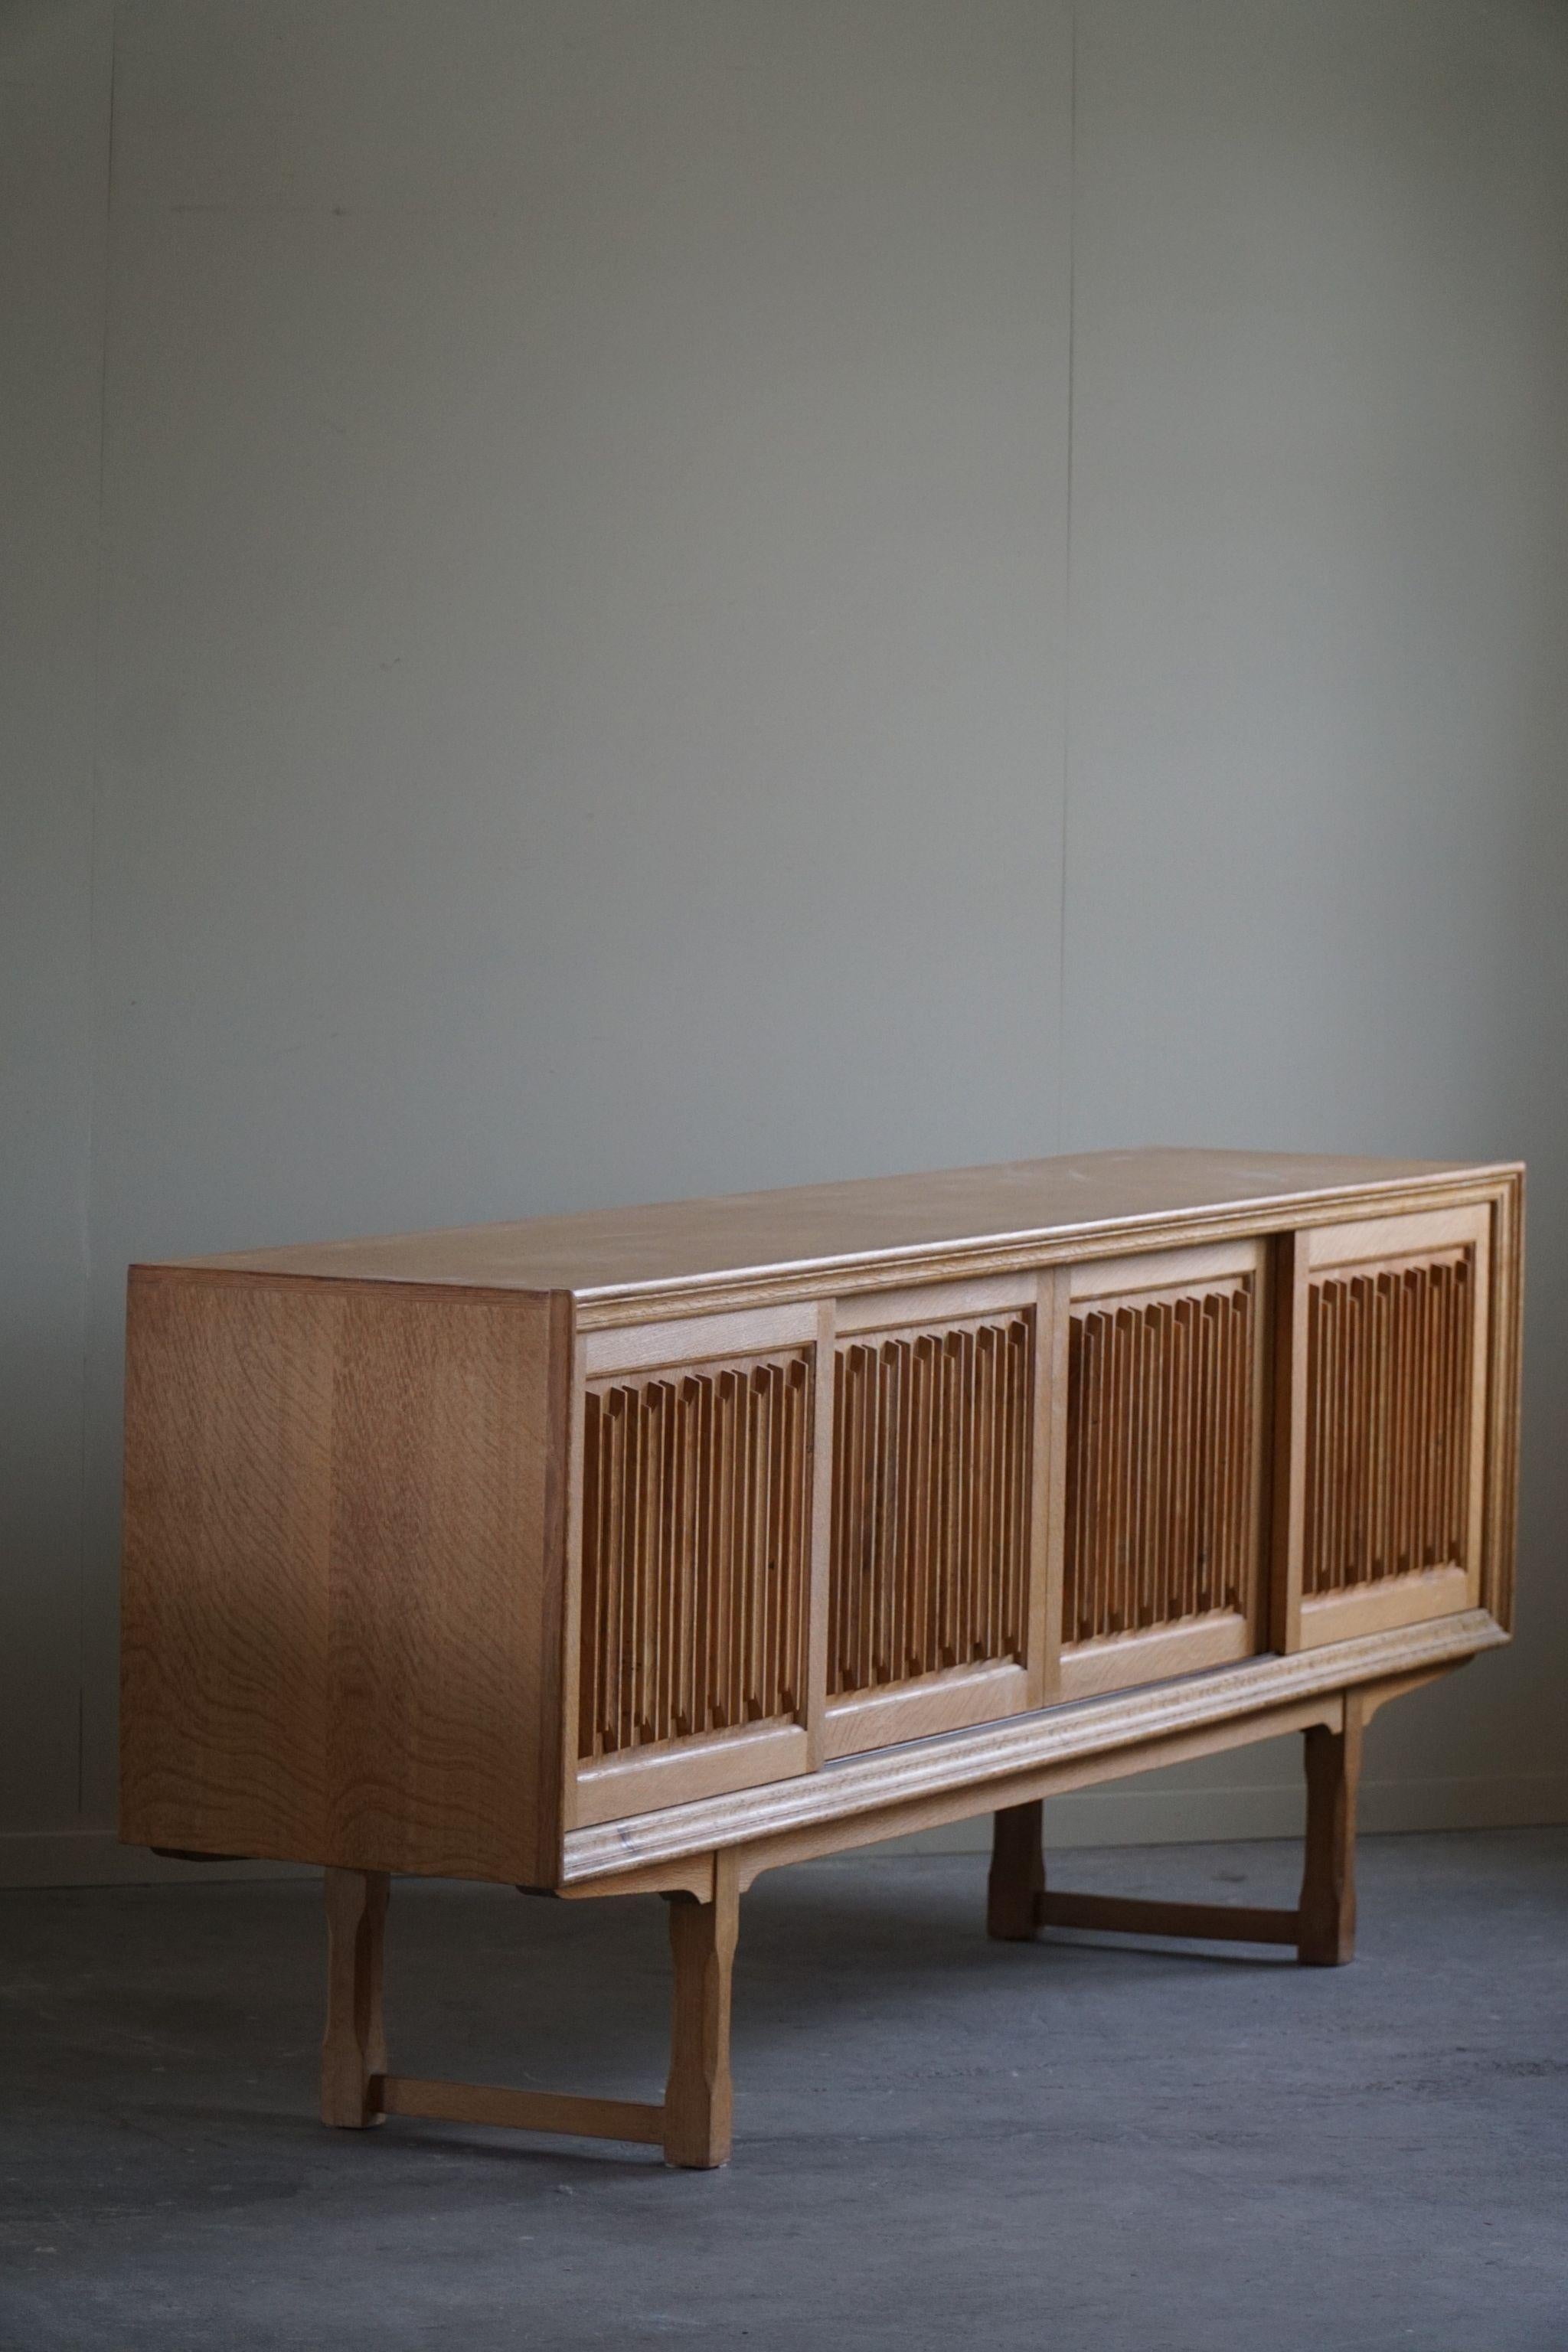 Sculptural Low Sideboard in Oak, Mid Century Modern, Danish Cabinetmaker, 1960s In Good Condition For Sale In Odense, DK